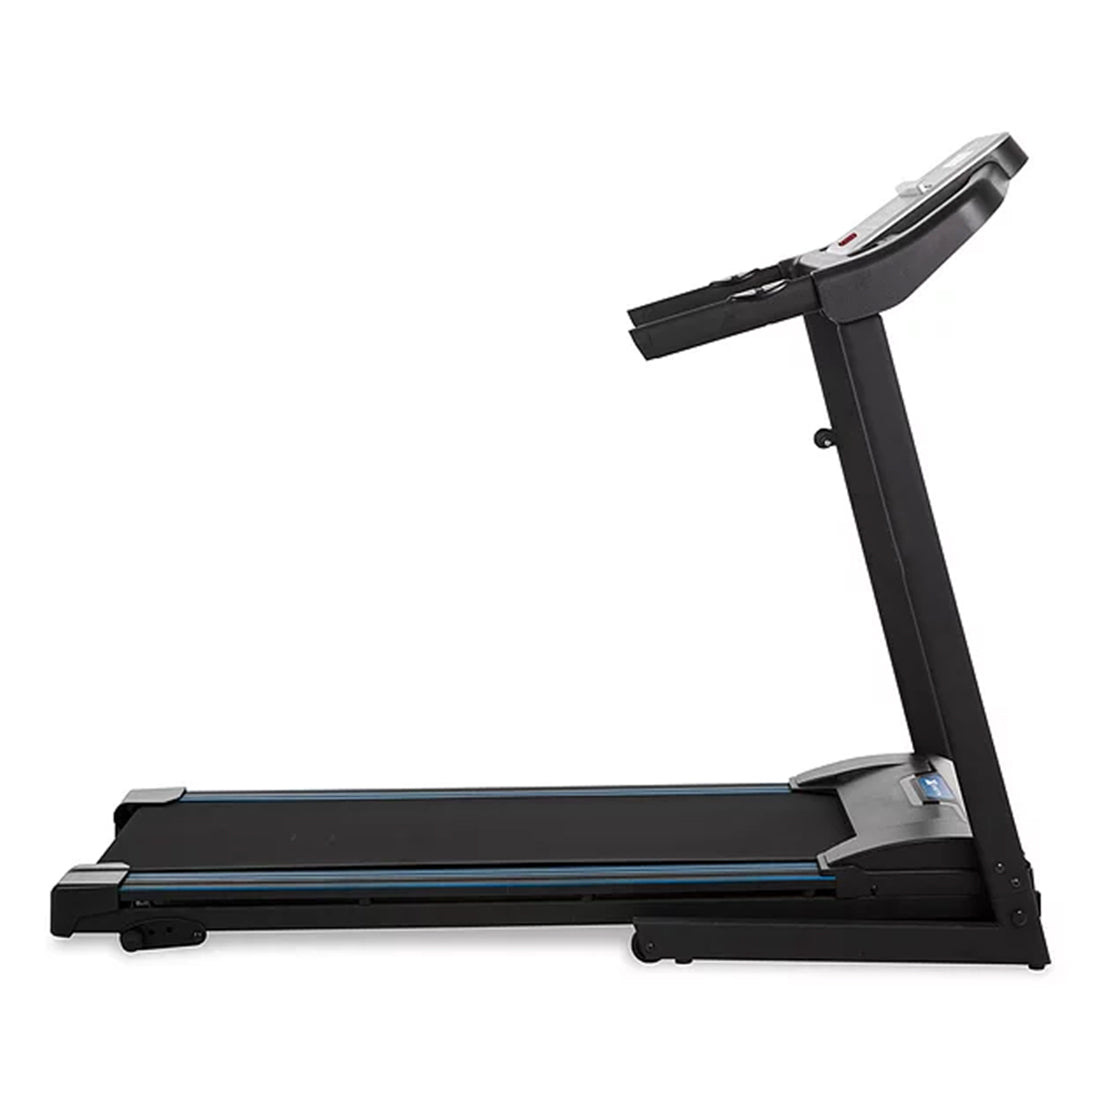 Xterra TR180 Treadmill incline feature